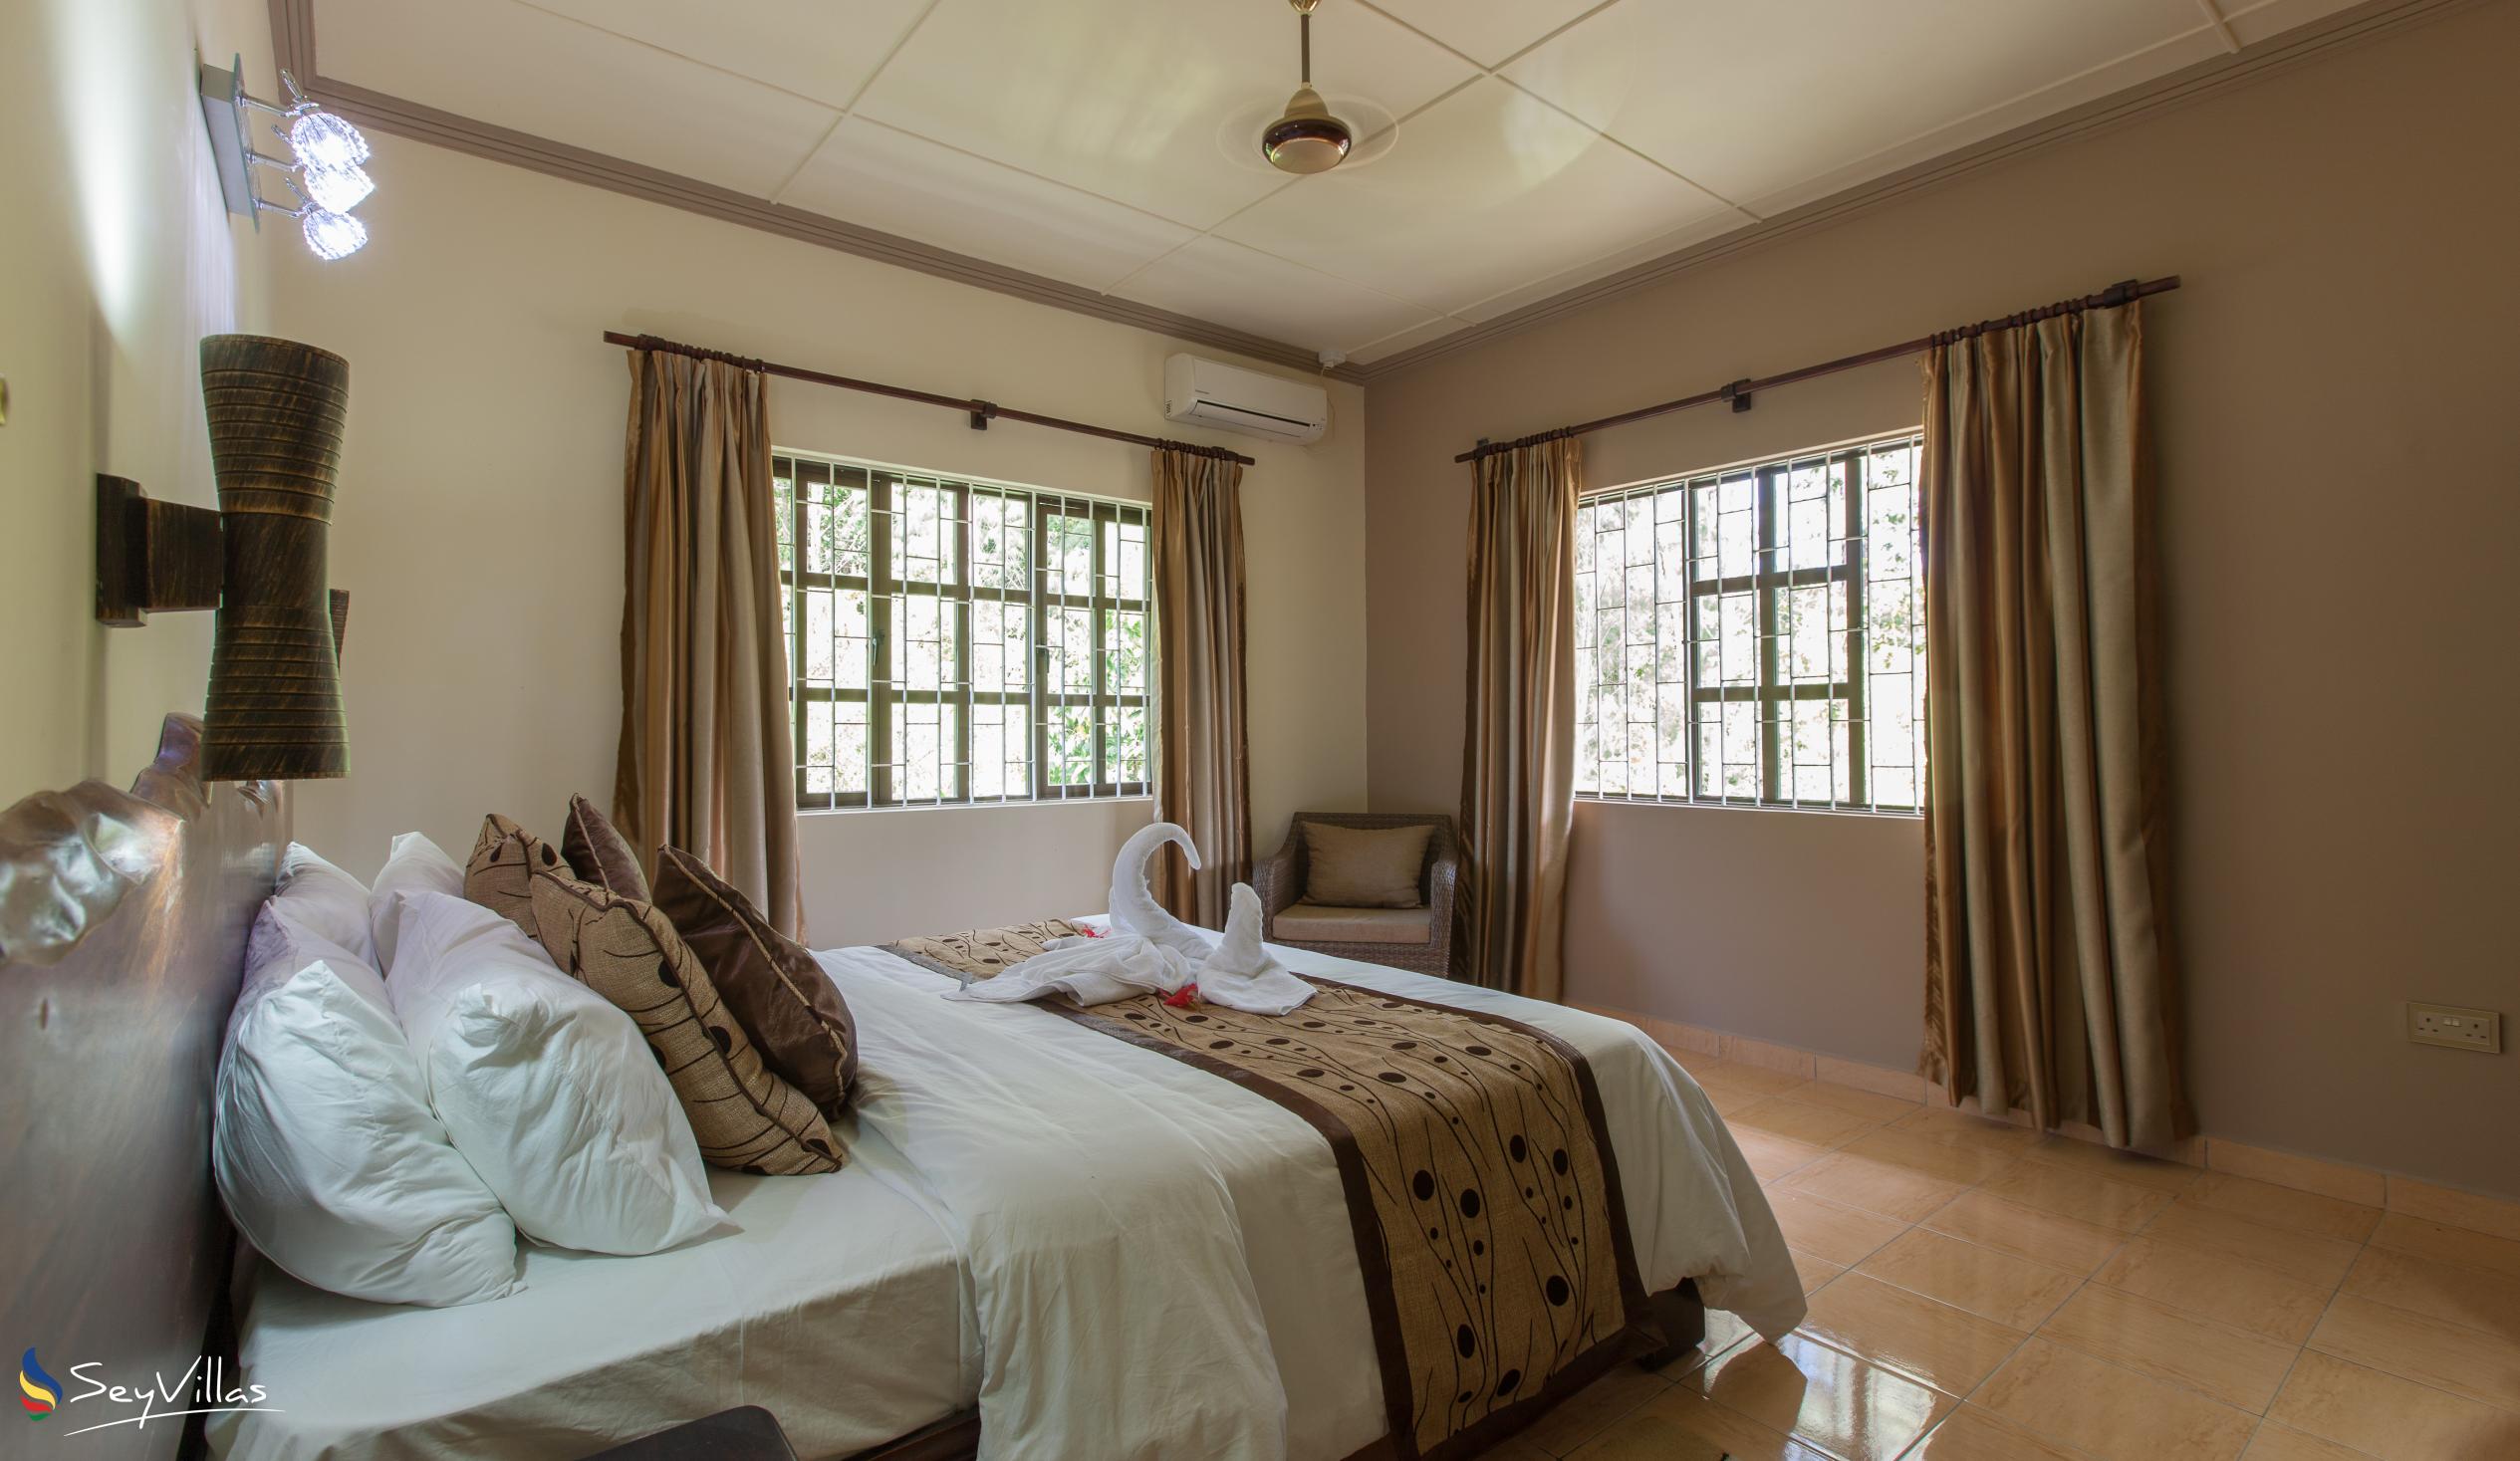 Foto 109: Chez Bea Villa - Appartamento con 1 camera - Praslin (Seychelles)